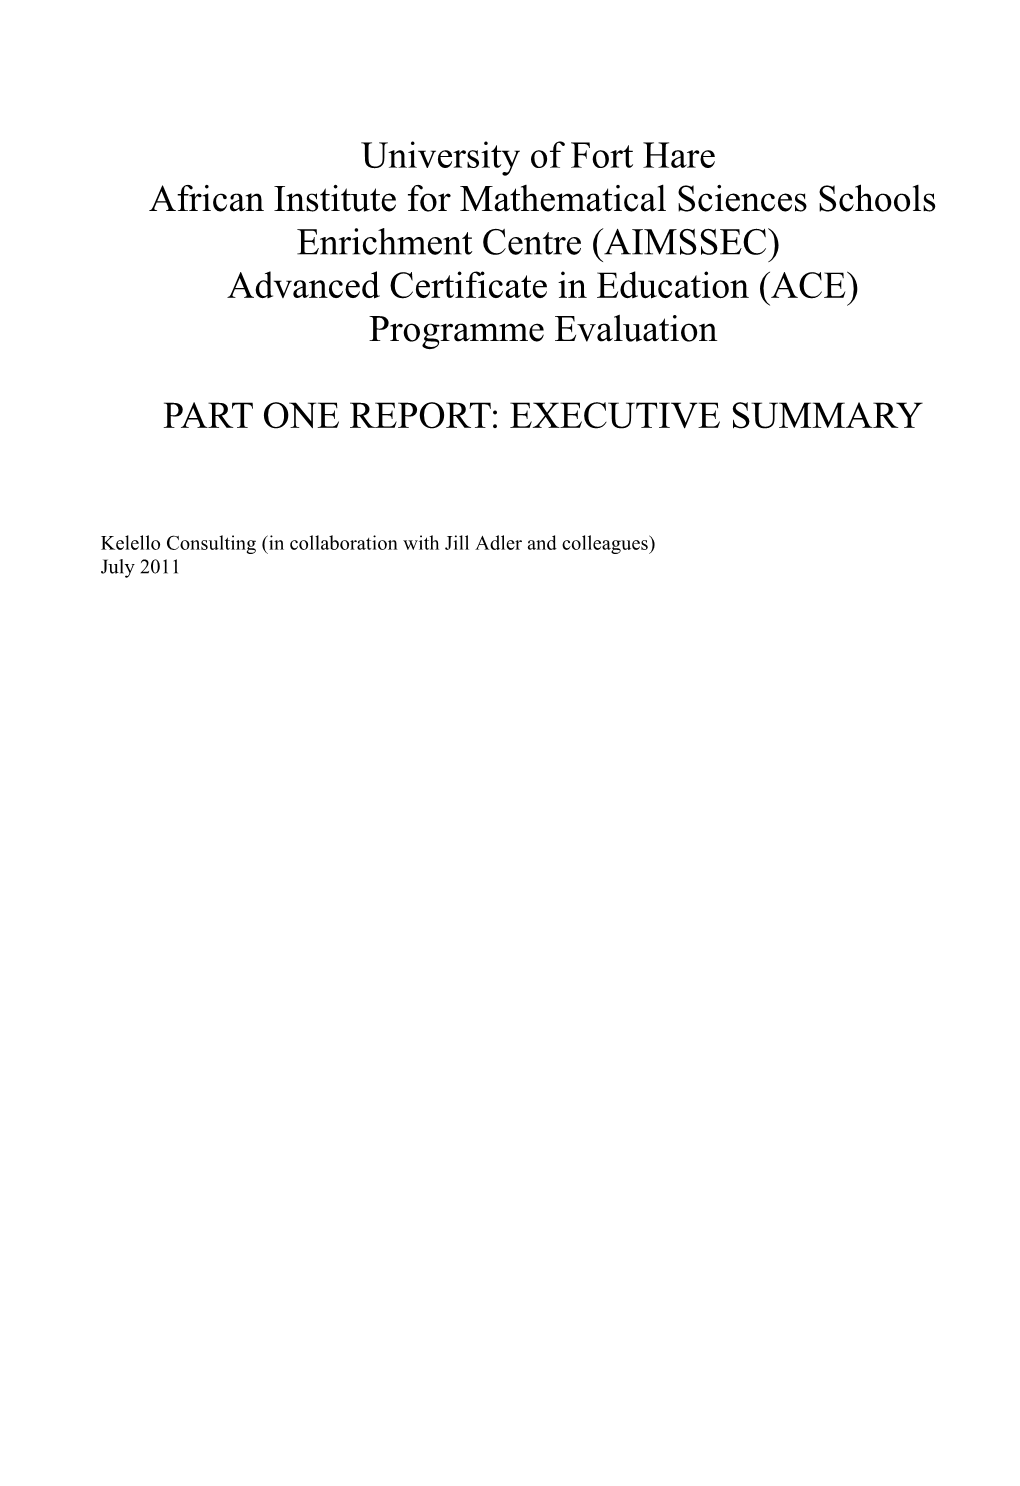 EXECUTIVE SUMMARY: UFH AIMSSEC ACE Programme Evaluation